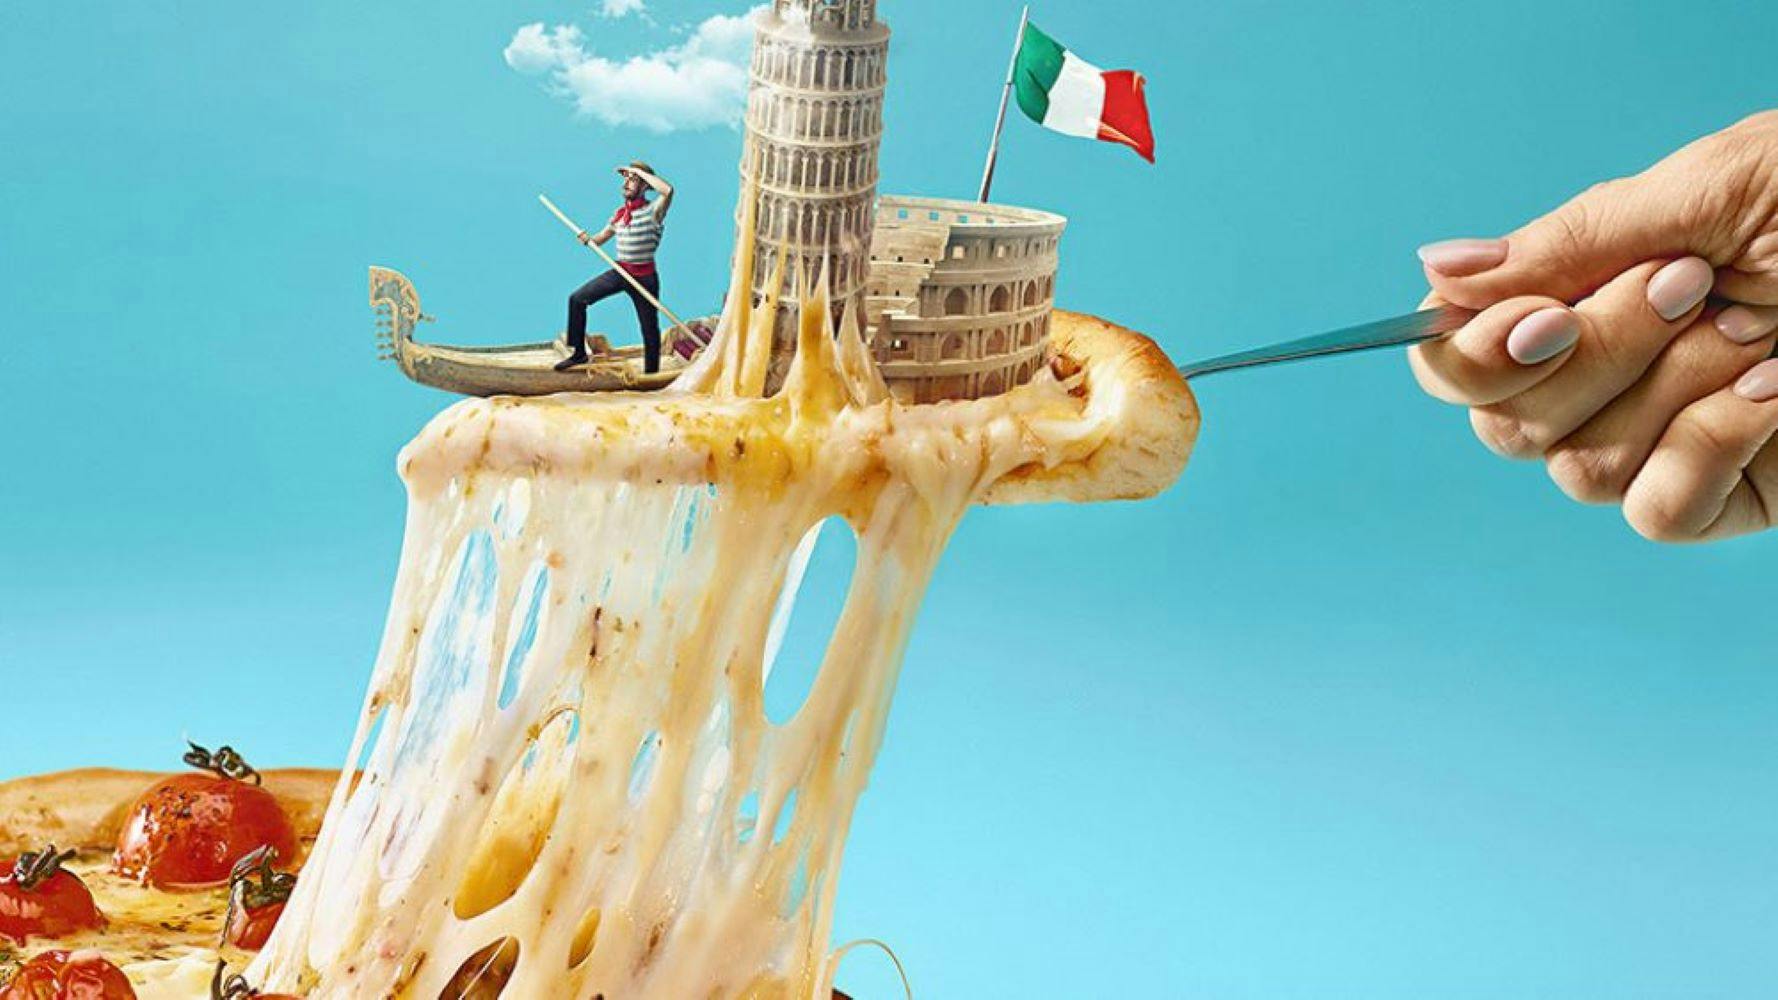 ITALIENISCHE NACHT - Minestrone, Pasta, Tiramisu – ein lockerer Italo-Abend